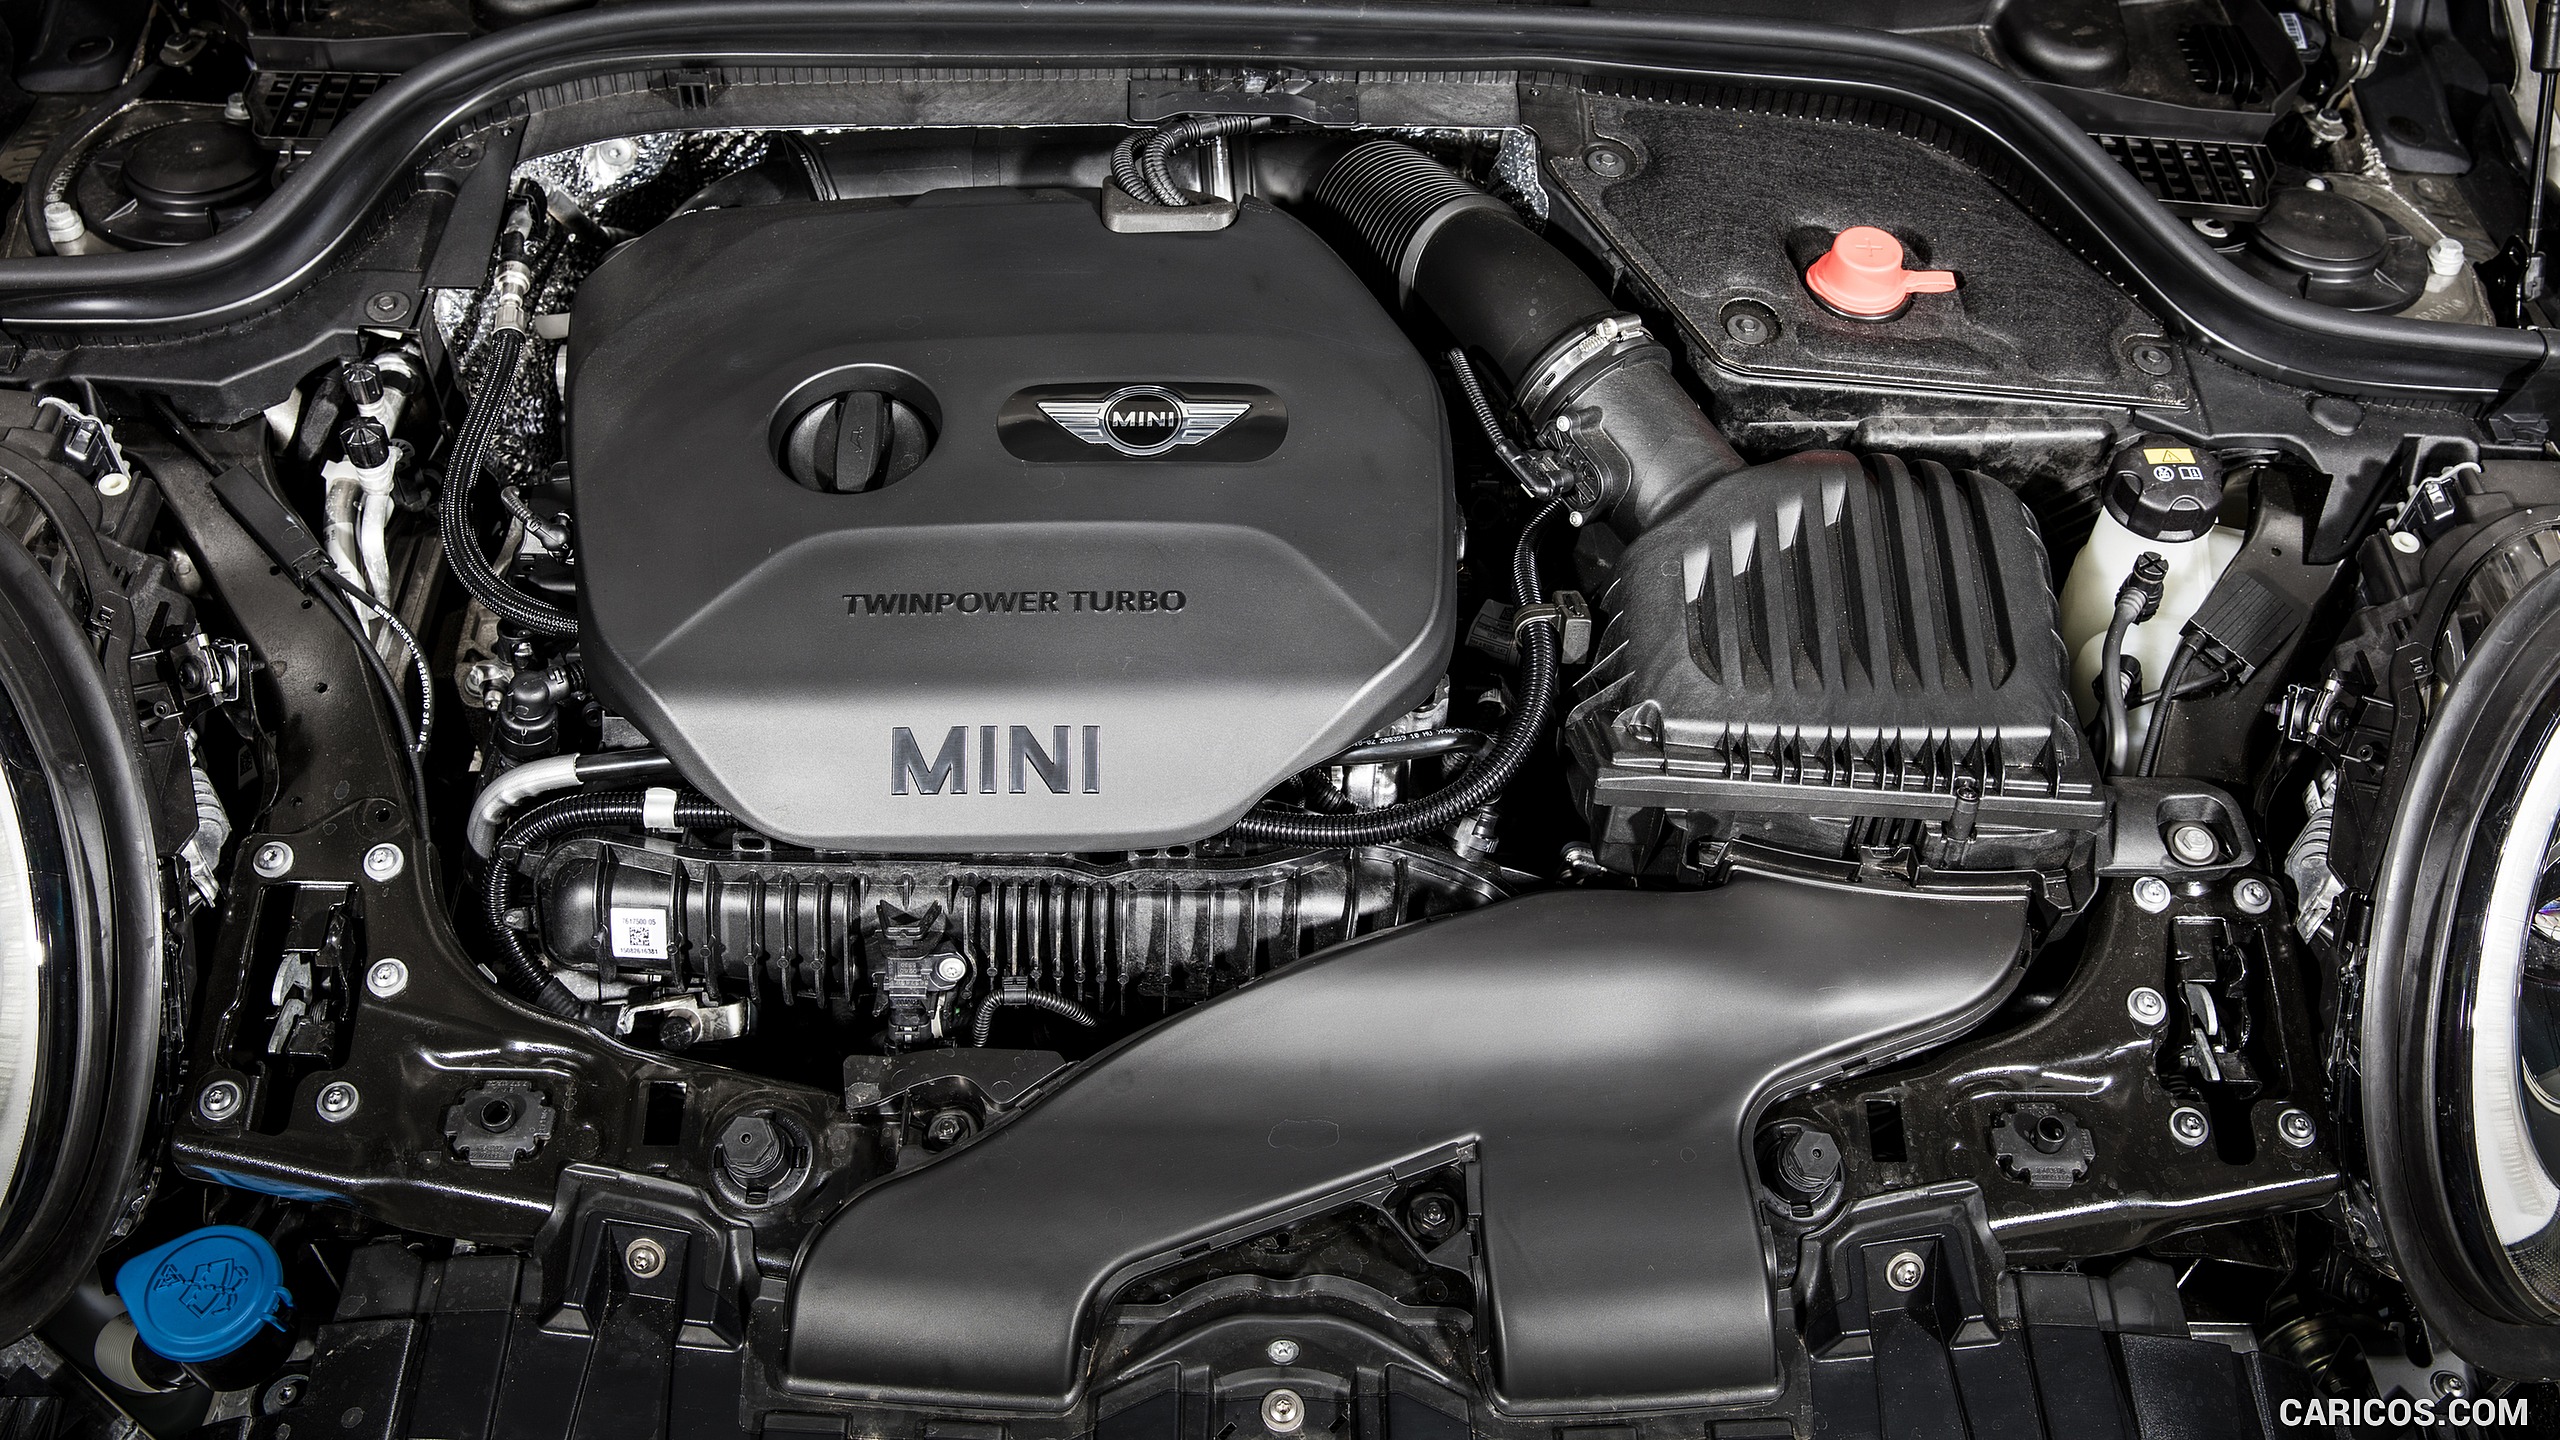 2016 MINI Convertible Open 150 Edition - Engine, #15 of 15